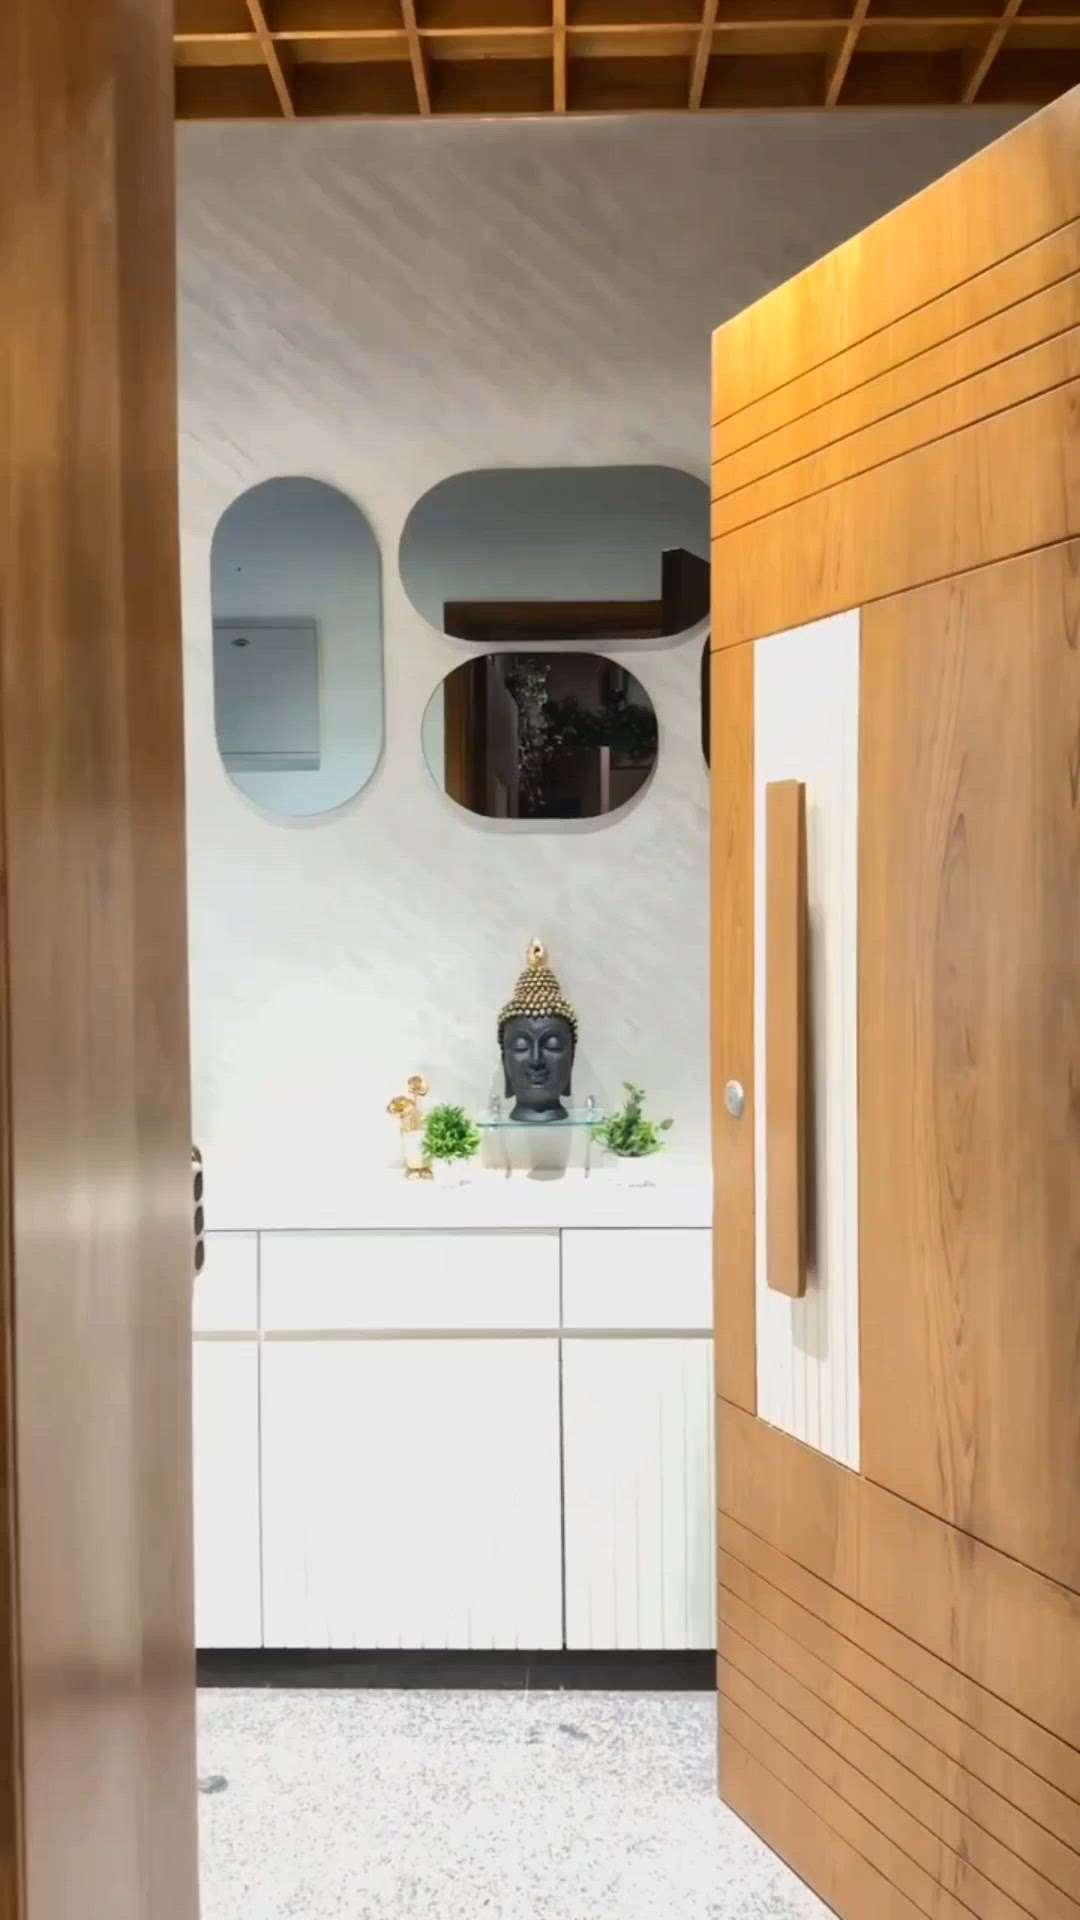 home interior #InteriorDesigner #KitchenInterior #LivingRoomInspiration #KitchenIdeas #BathroomDesigns #BathroomTIles #Painter #falcelling #Plumber #SlidingDoorWardrobe #WardrobeIdeas #maindoor #vanitydesigns #mirrorunit #LivingRoomTVCabinet #modularTvunits #architecturedesigns